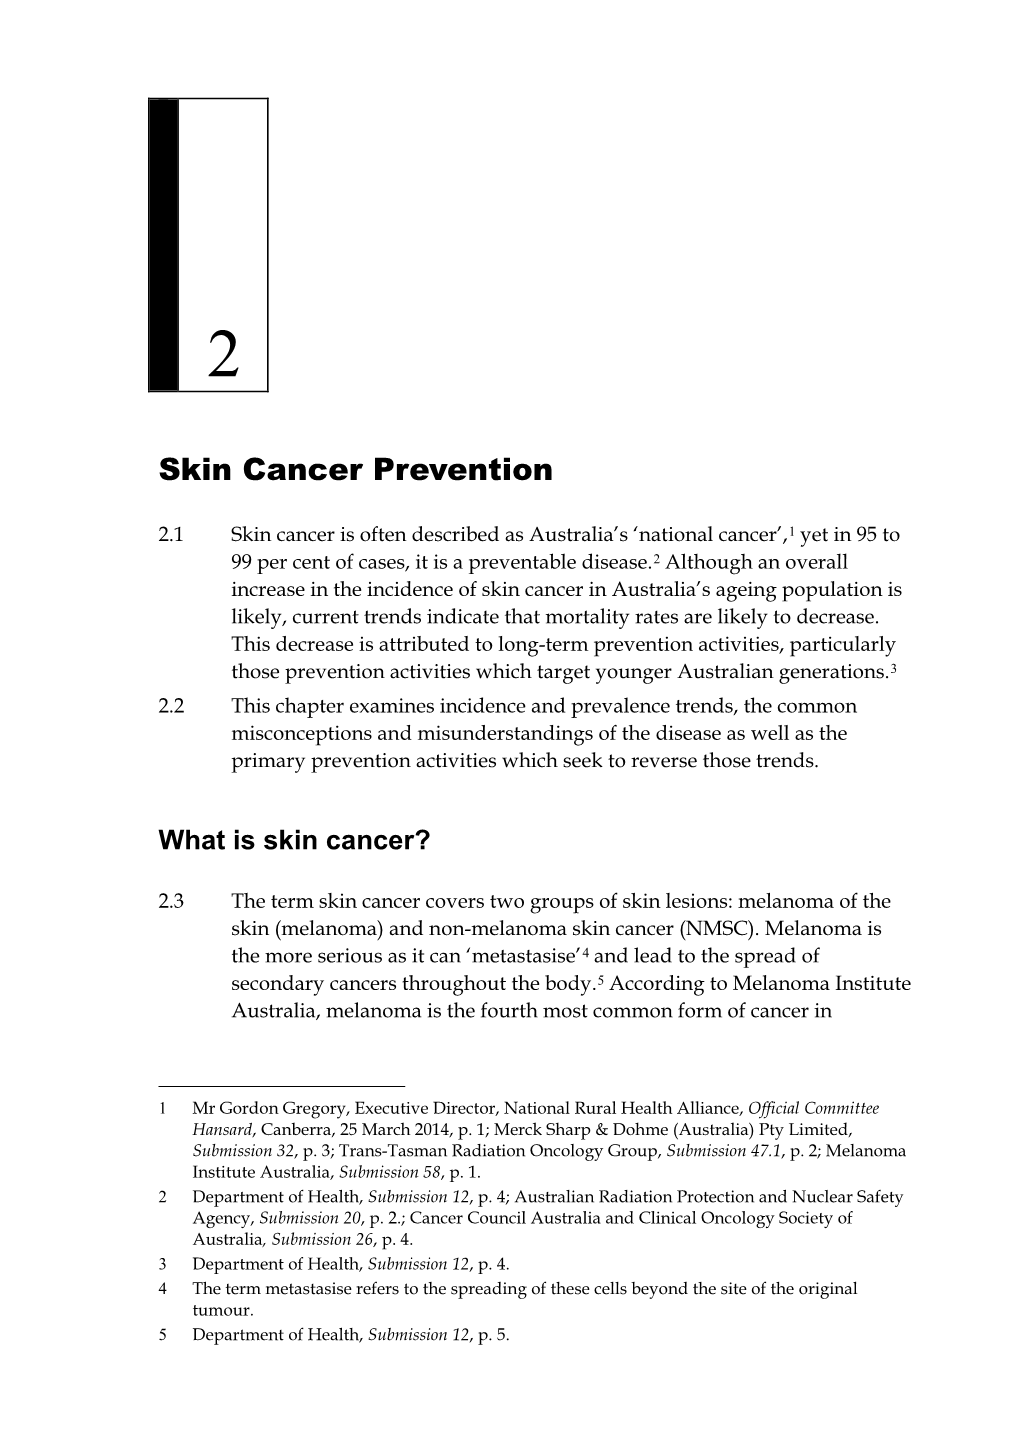 Chapter 2: Skin Cancer Prevention